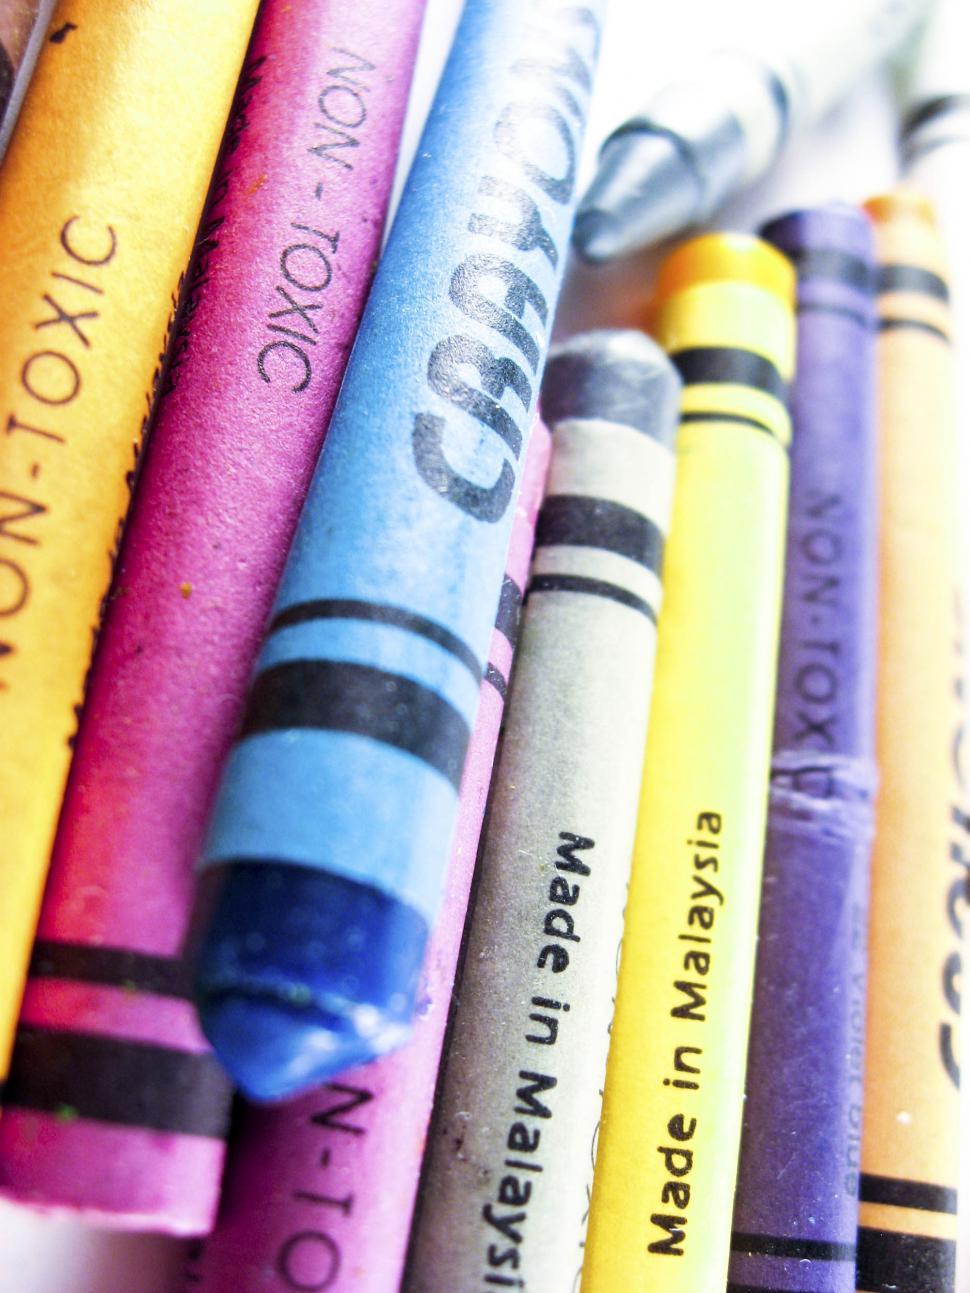 Free Image of crayons 